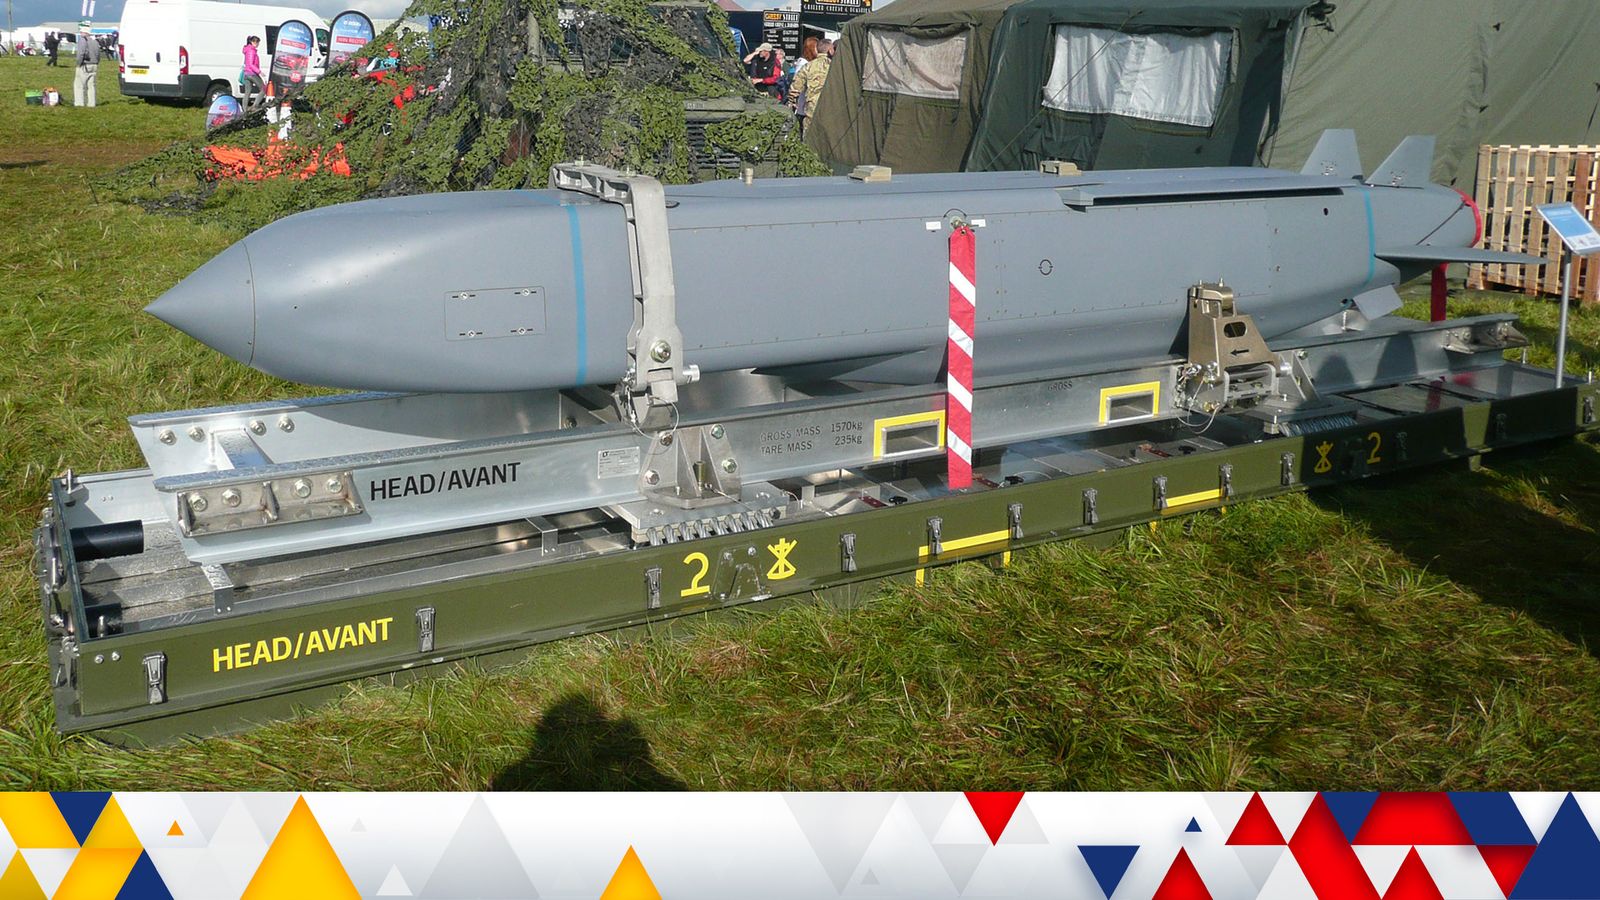 Storm Shadow missiles: UK sending long-range weapons to Ukraine, defence secretary confirms